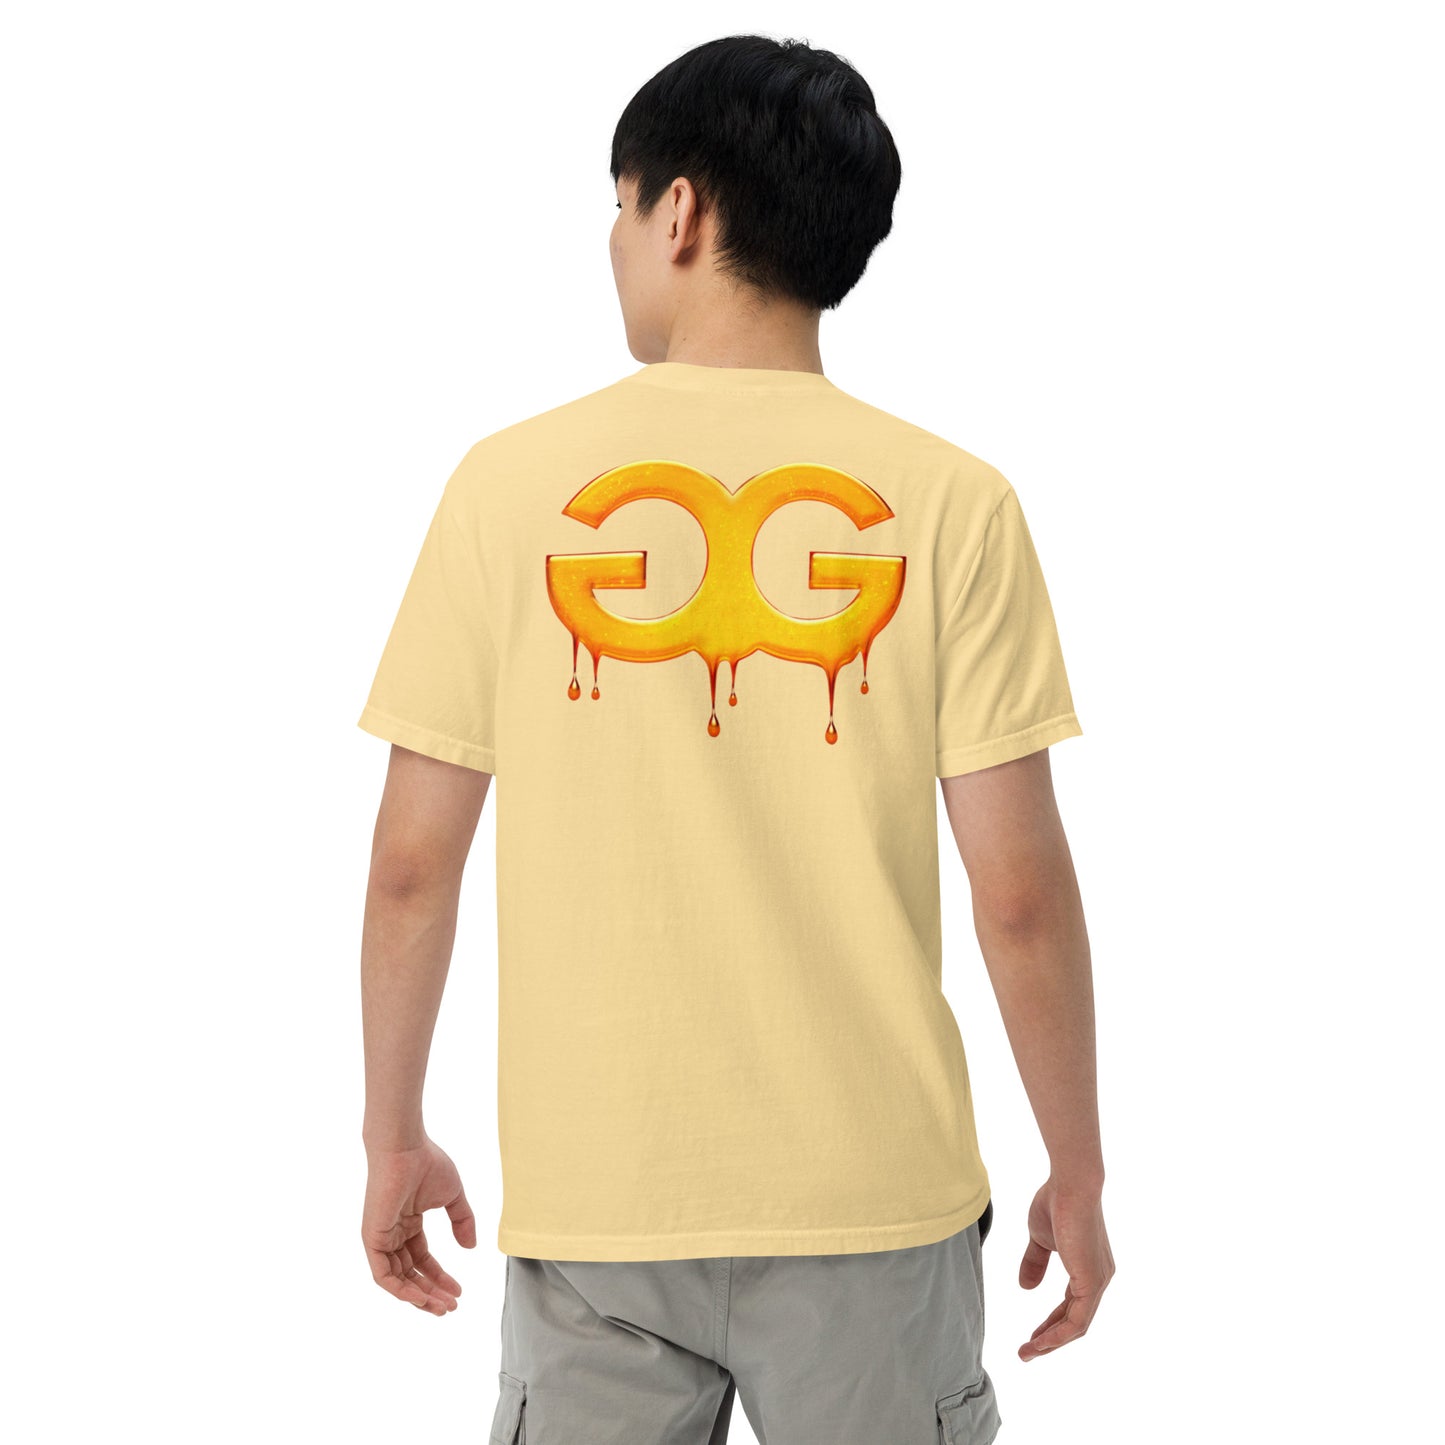 Gummy Gang Unisex garment-dyed t-shirt